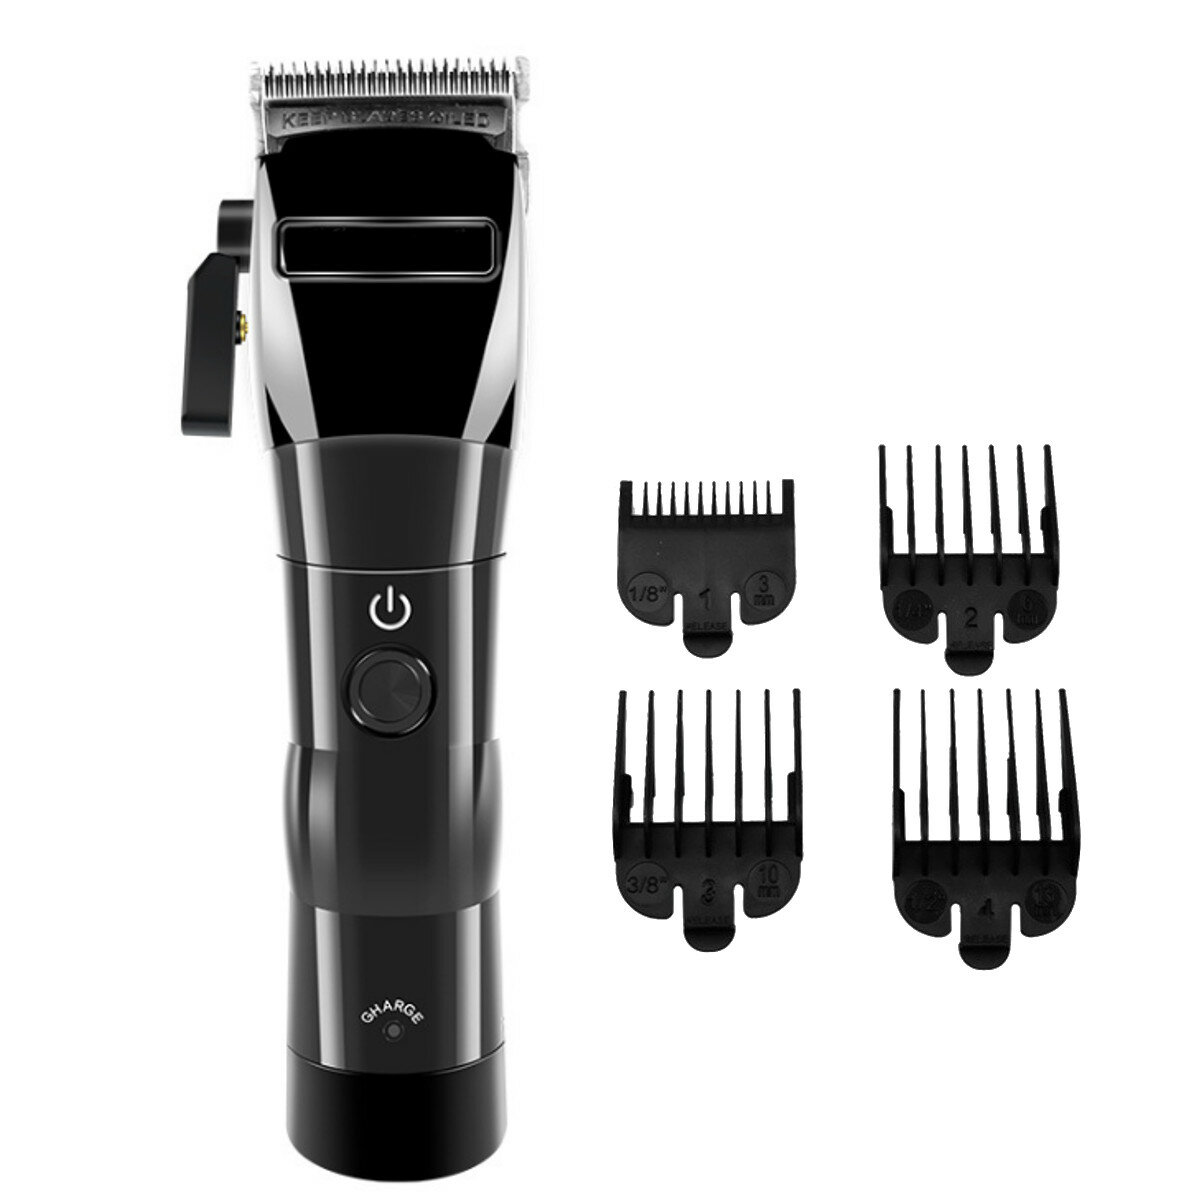 

KM-2850 Rechargeable Electric Cordless Hair Clipper Cutter Beard Trimmer Razor Shaver Haircut Machine